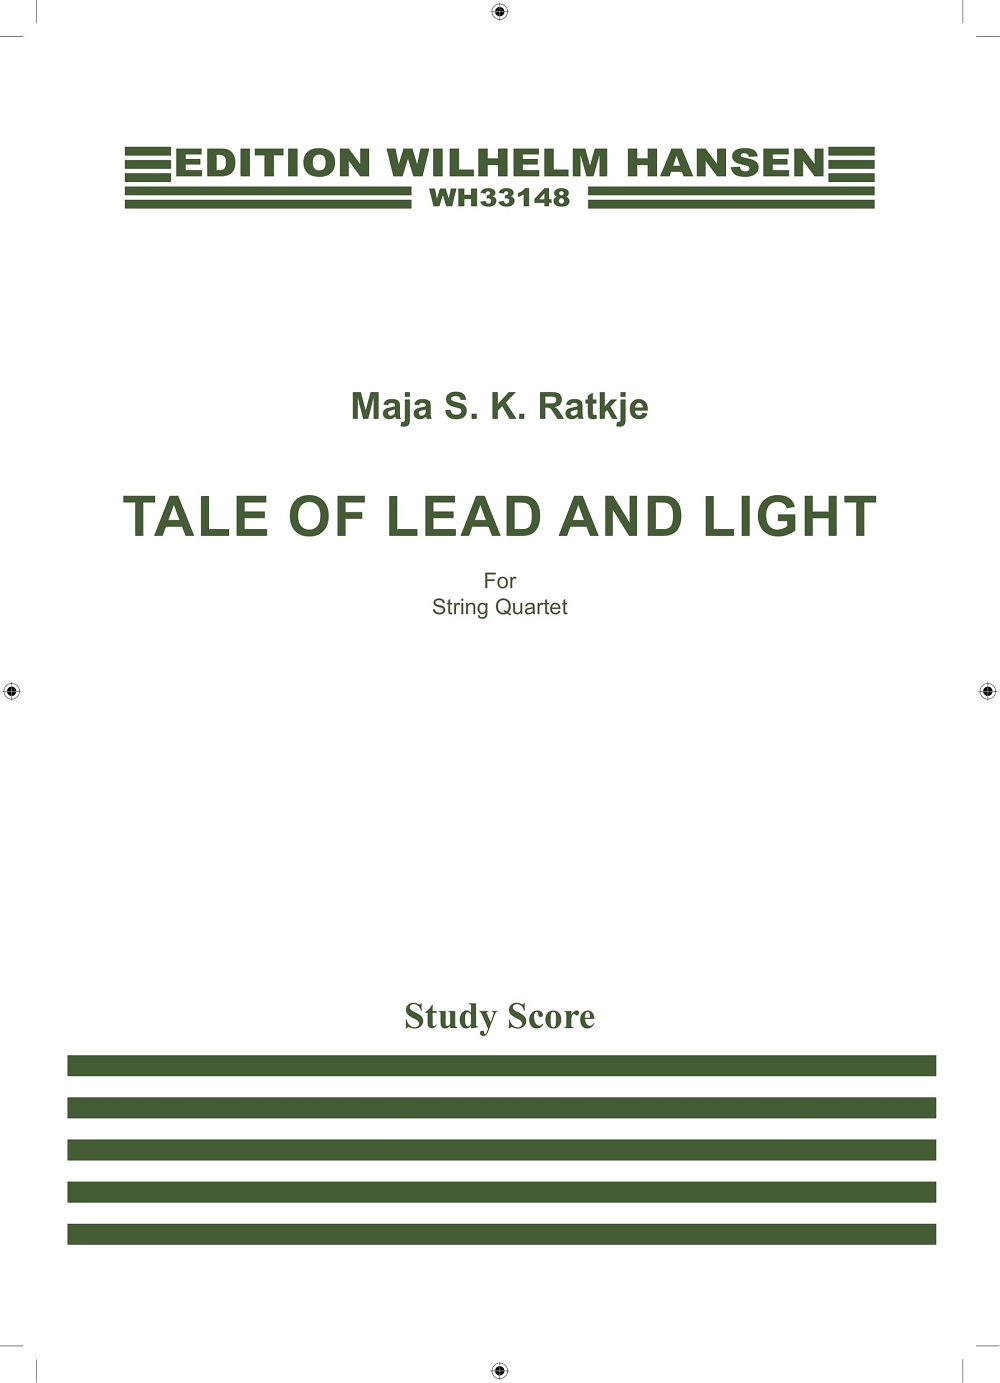 Maja S.K. Ratkje: Tale of Lead and Light: String Quartet: Study Score